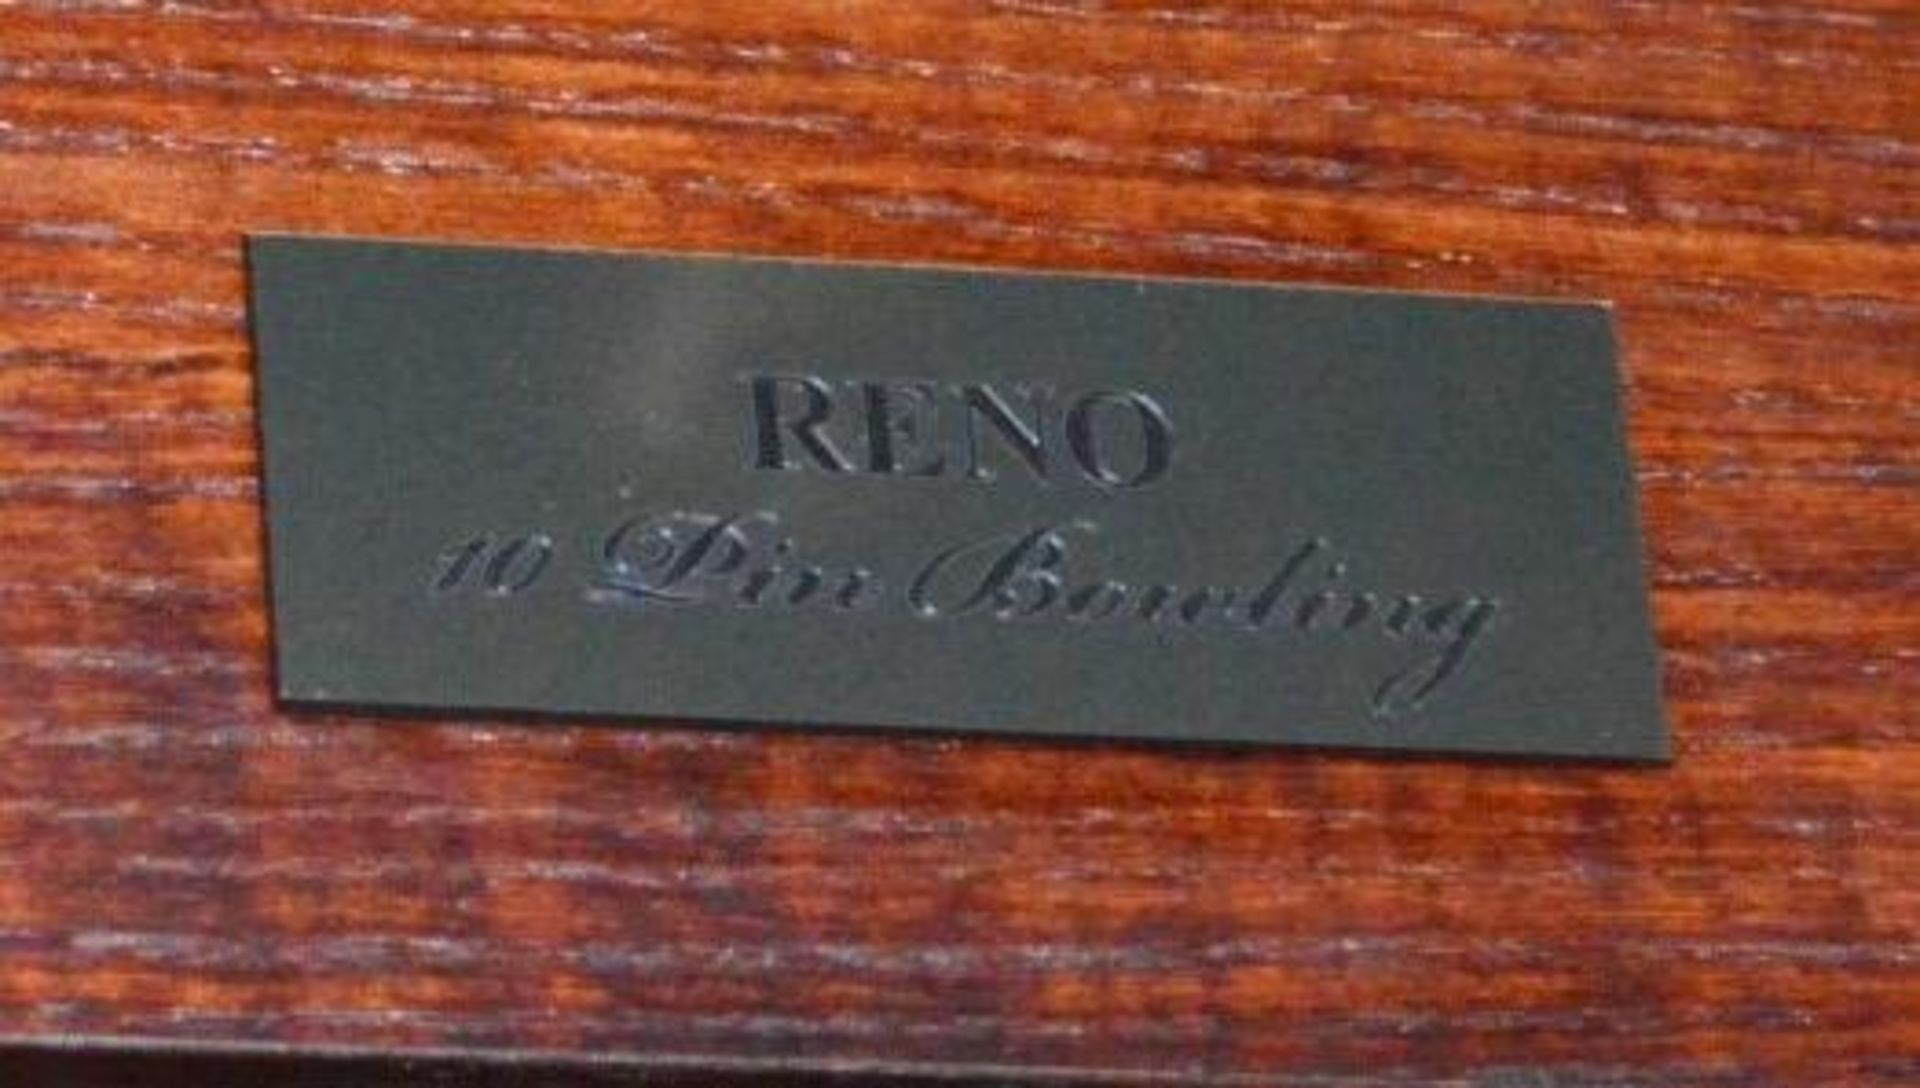 1 x Americana Wall Mounted Illuminated Display Case - RENO 10 PIN BOWLING - Includes Various Images, - Image 5 of 5